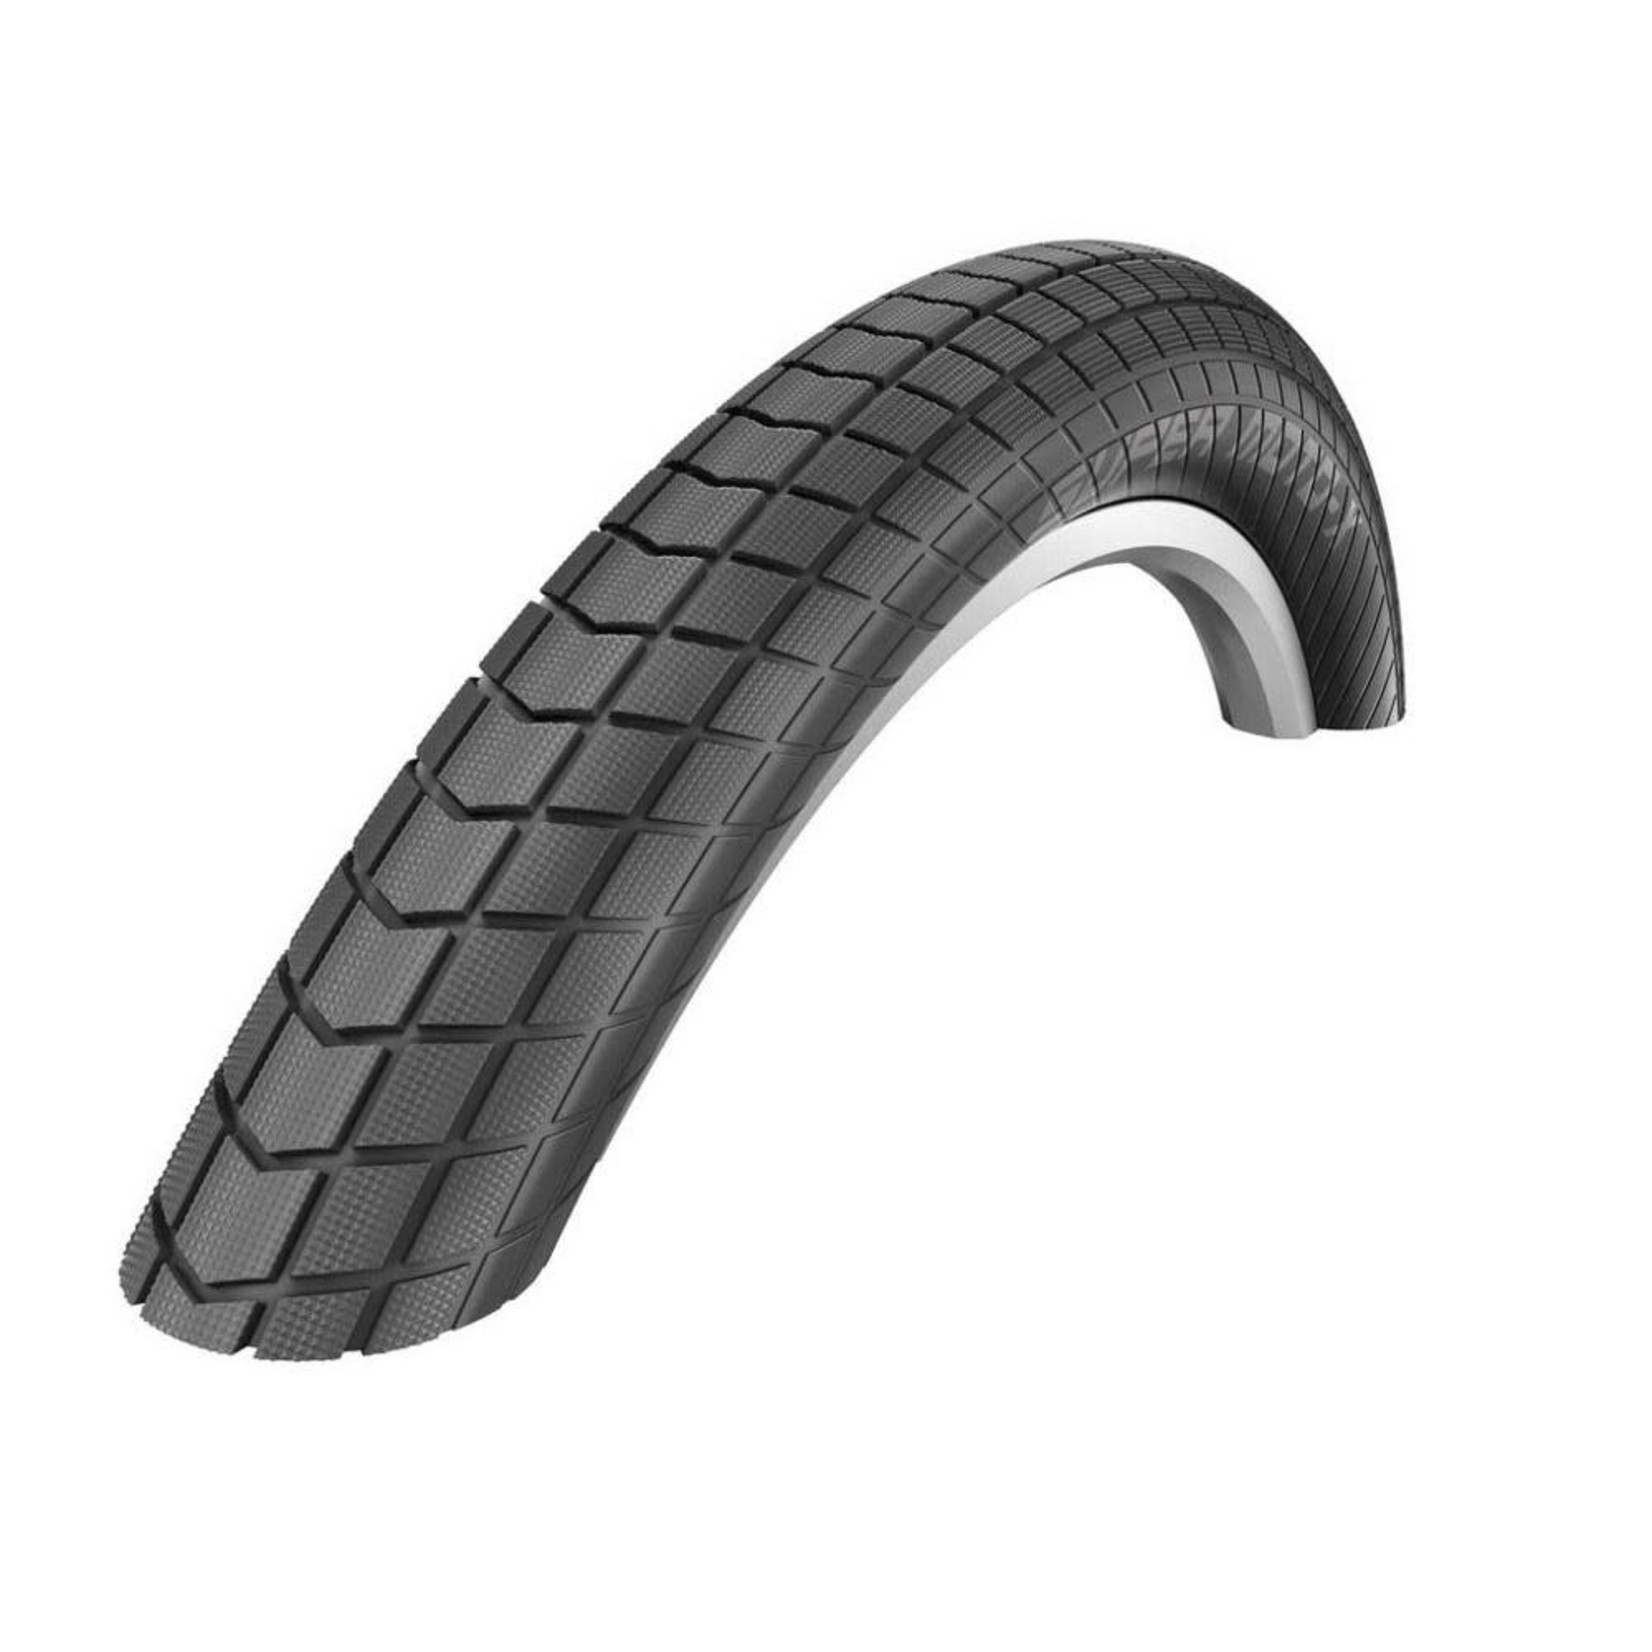 Schwalbe Super Moto X - Green Guard Skake Skin Tyre 27.5x2.4